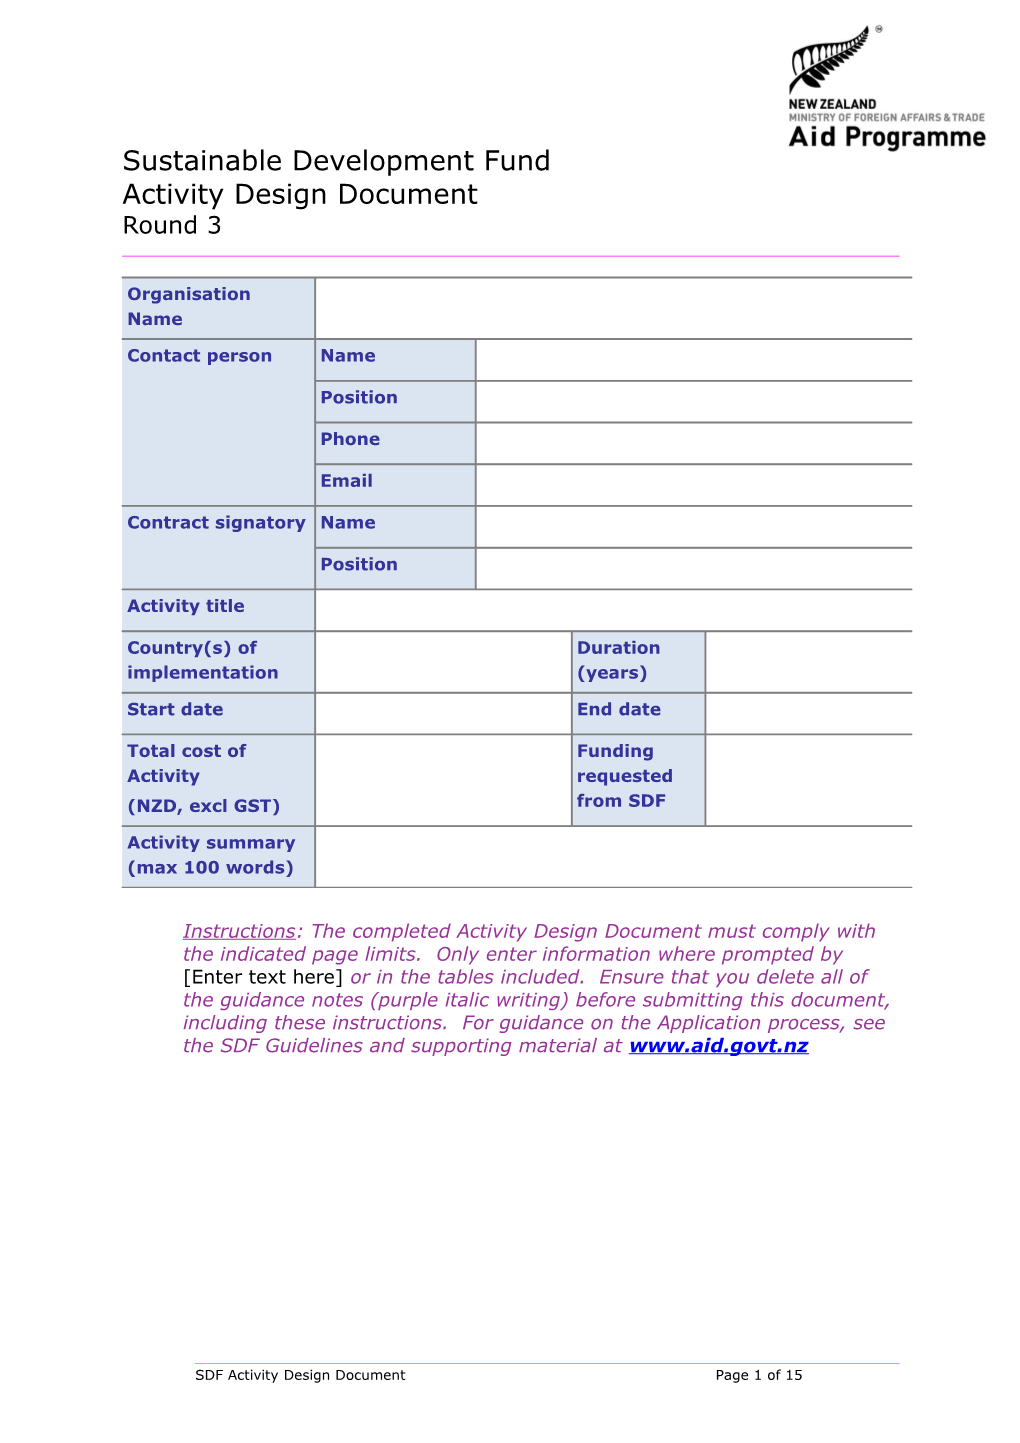 SDF3 Activity Design Document Template